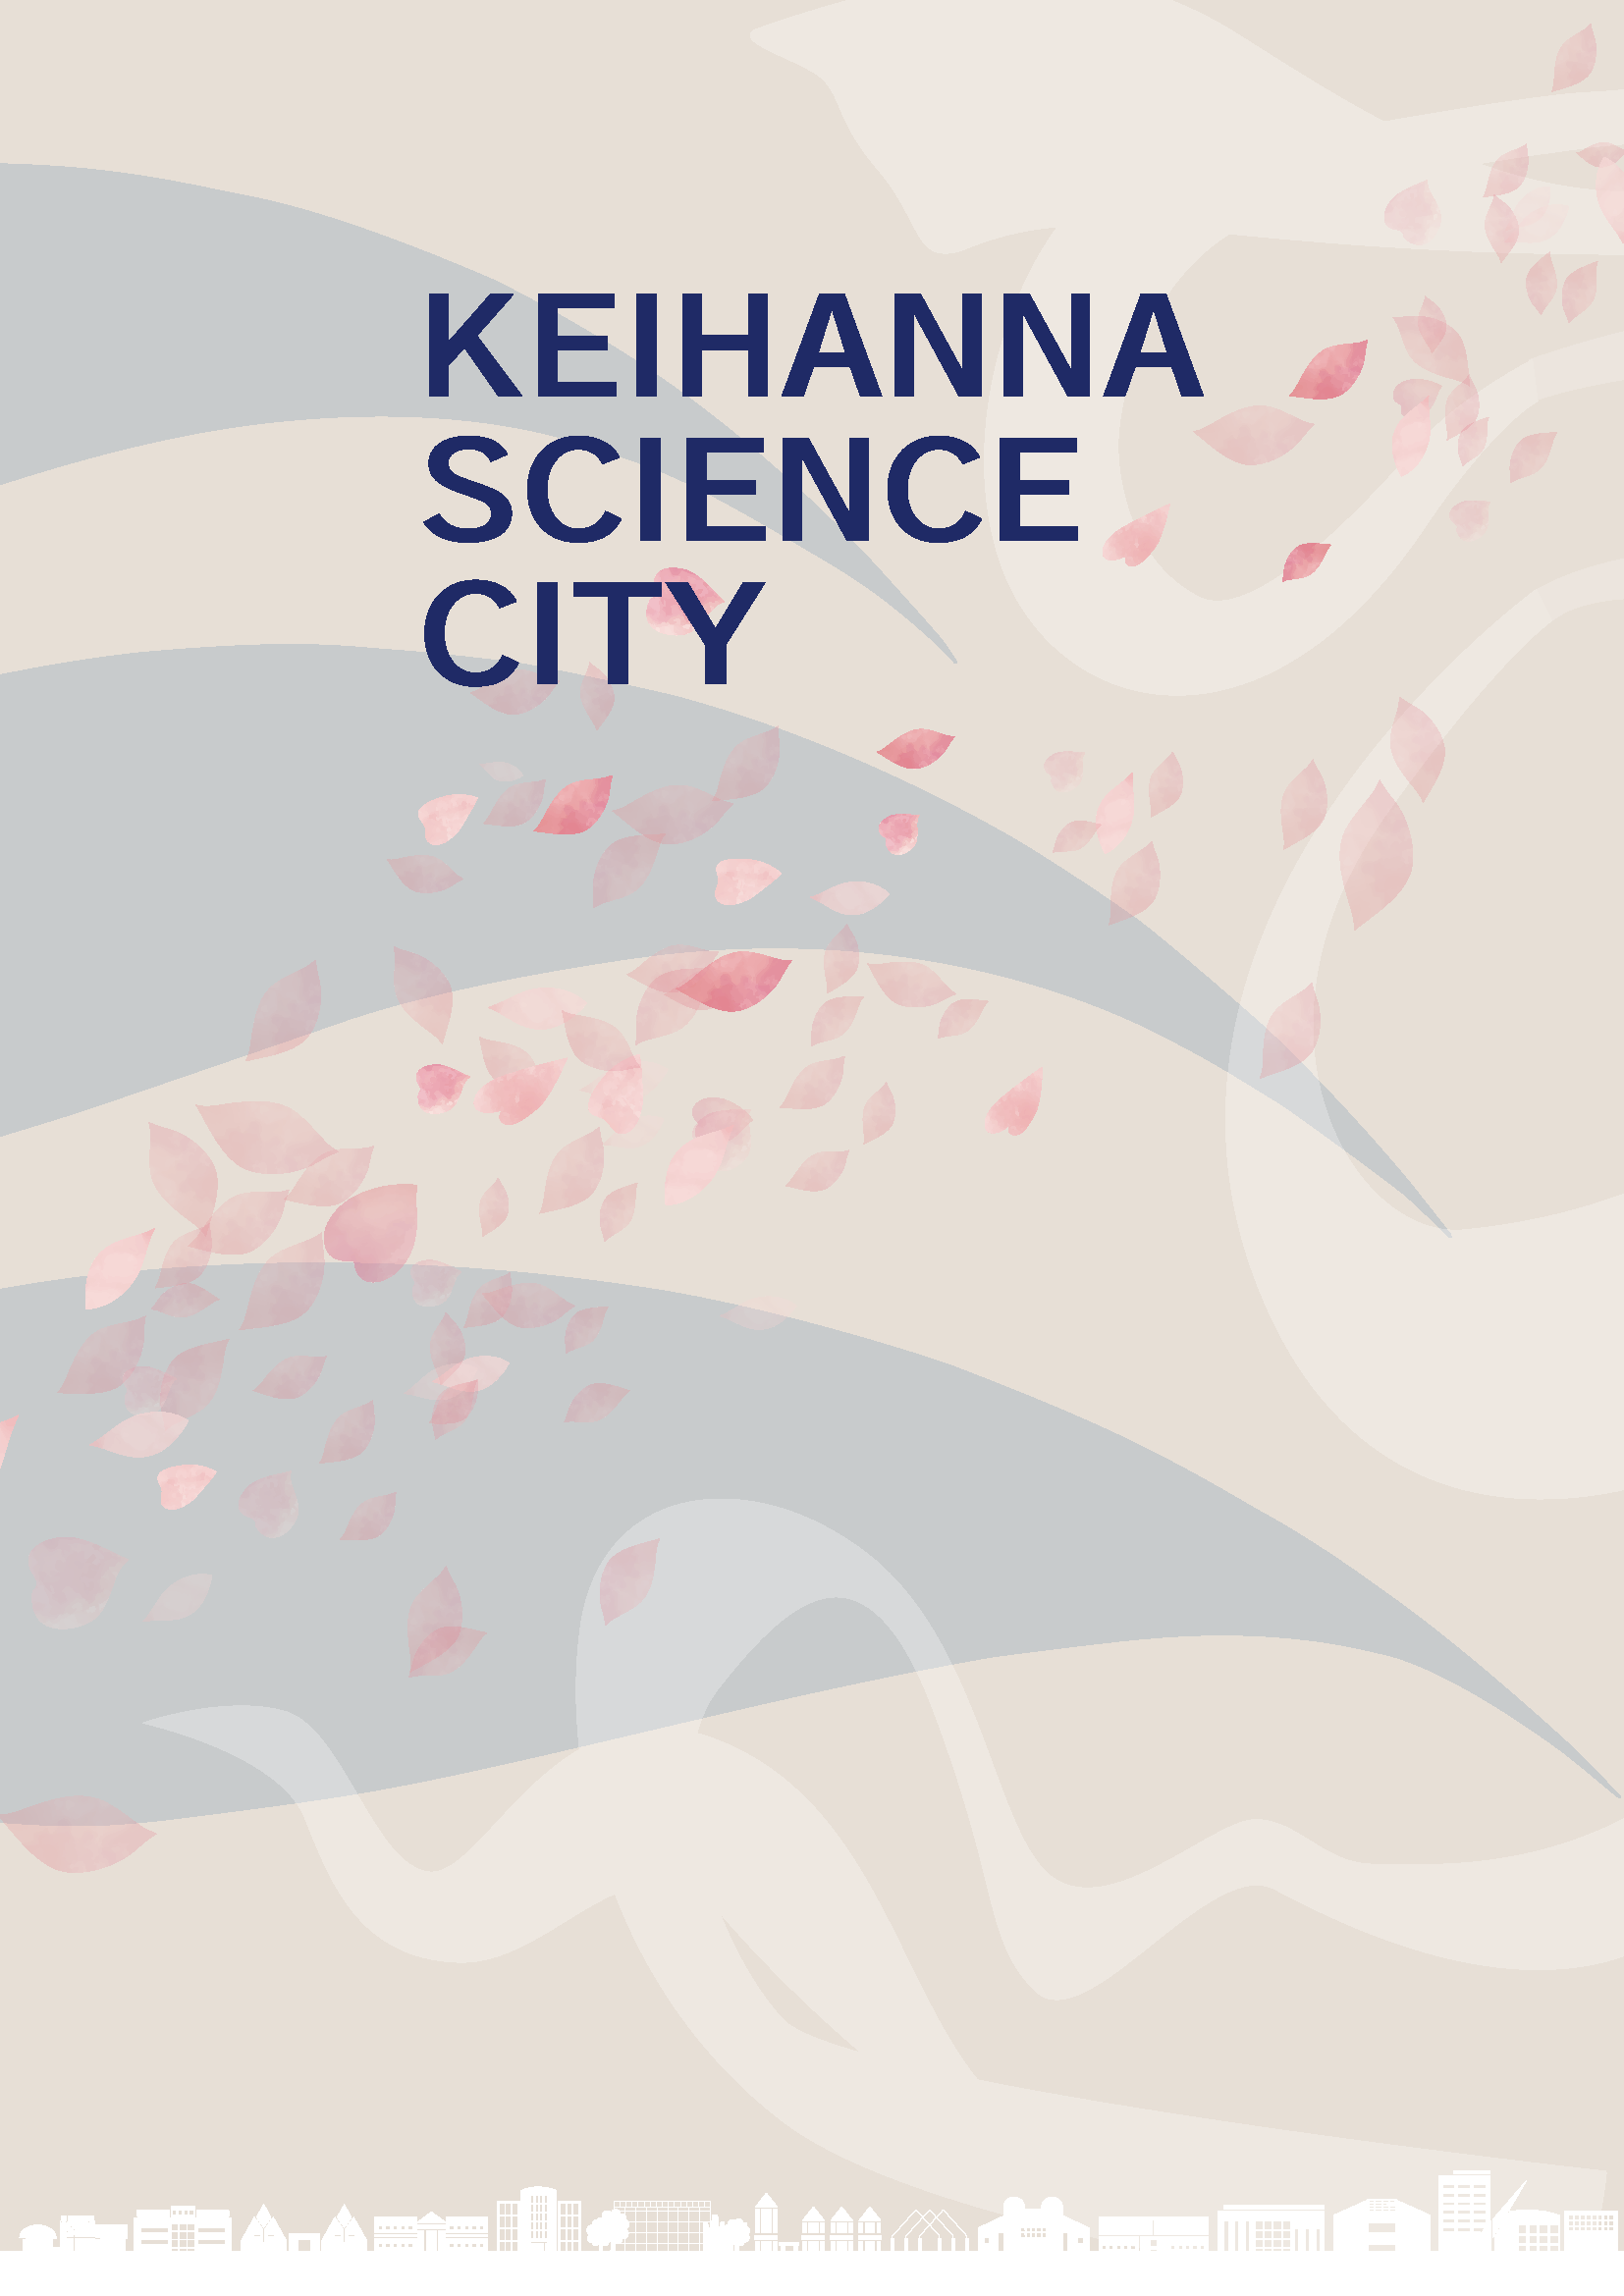  Keihanna Science City - Brochure